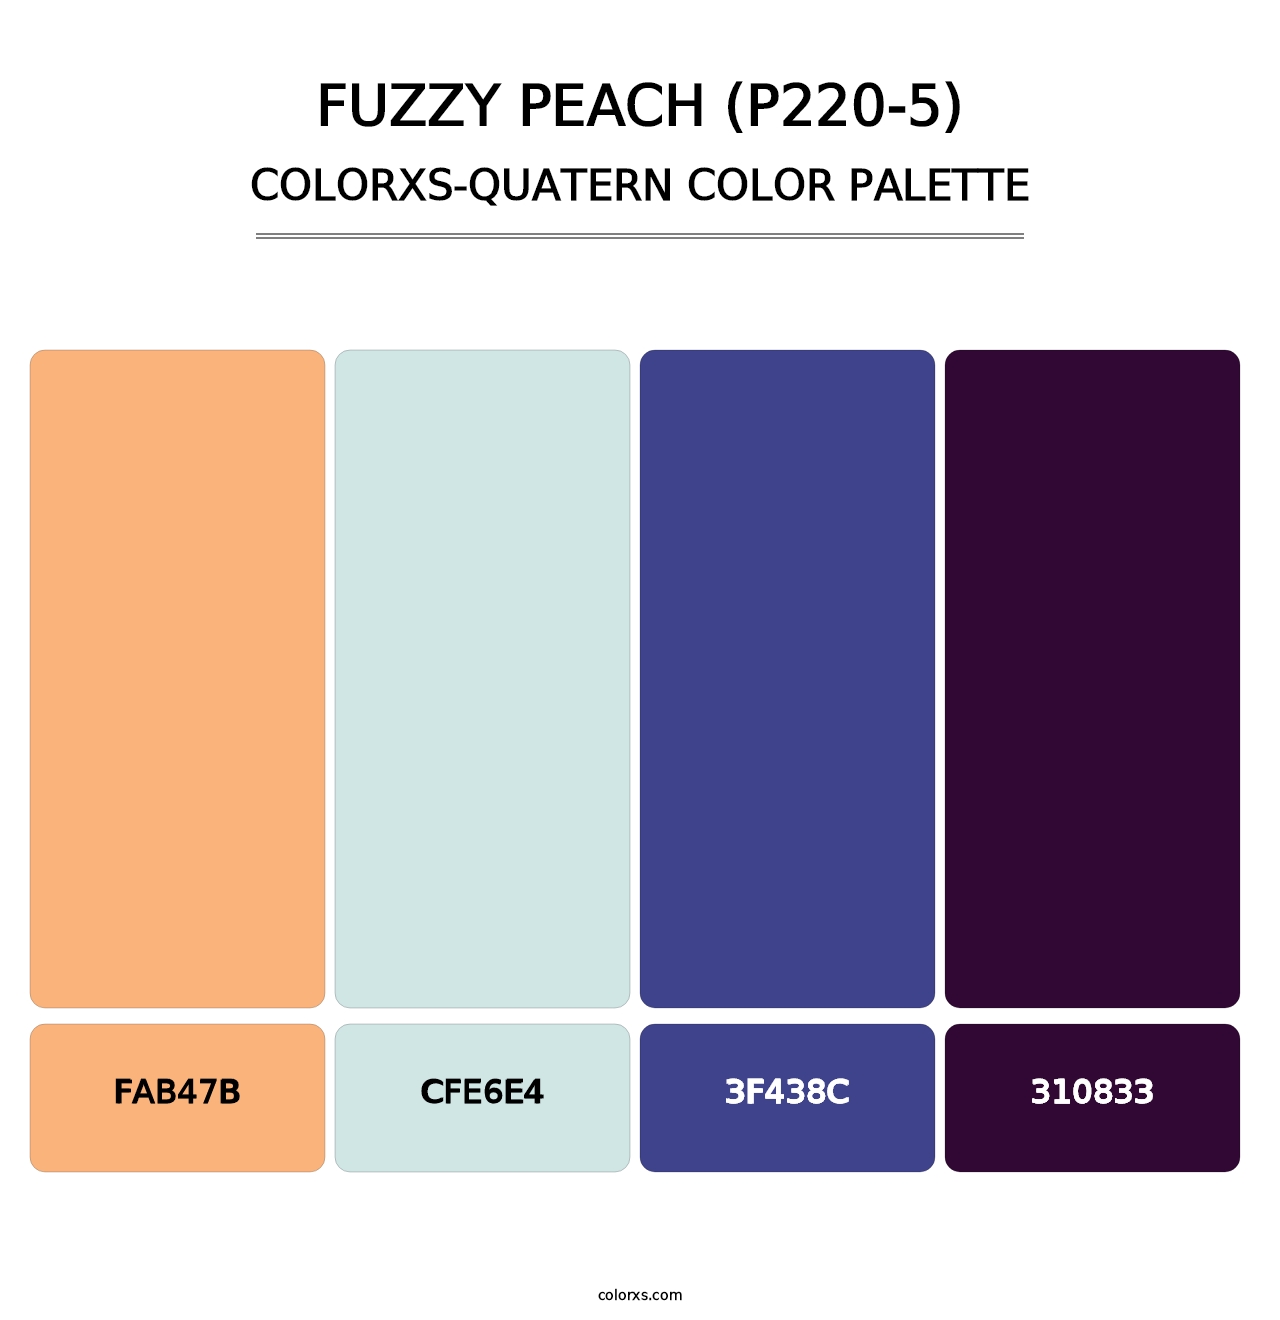 Fuzzy Peach (P220-5) - Colorxs Quatern Palette